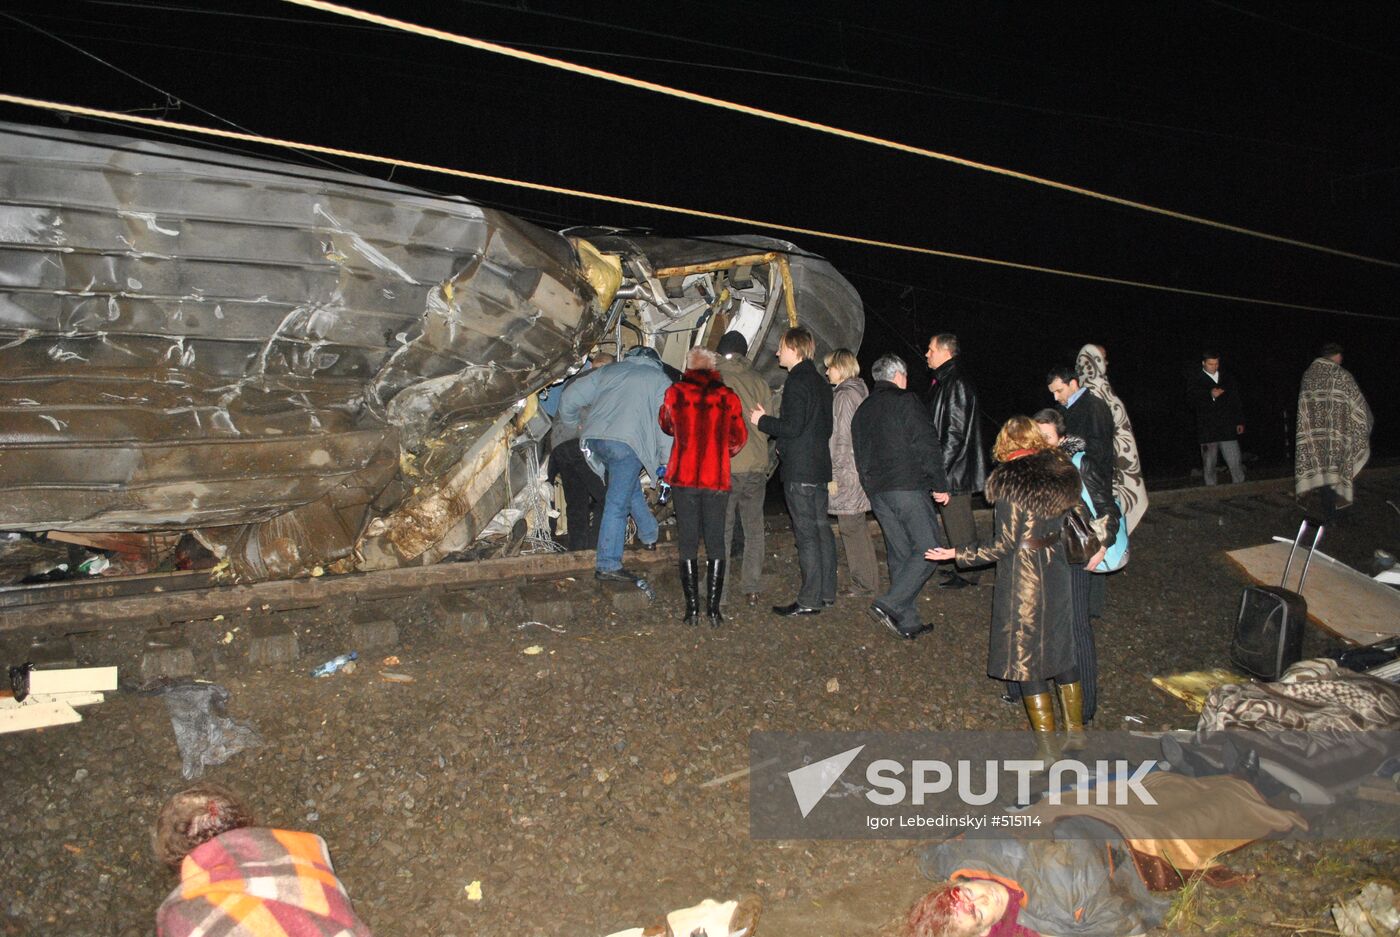 Nevsky Express train derailed in Tver Region